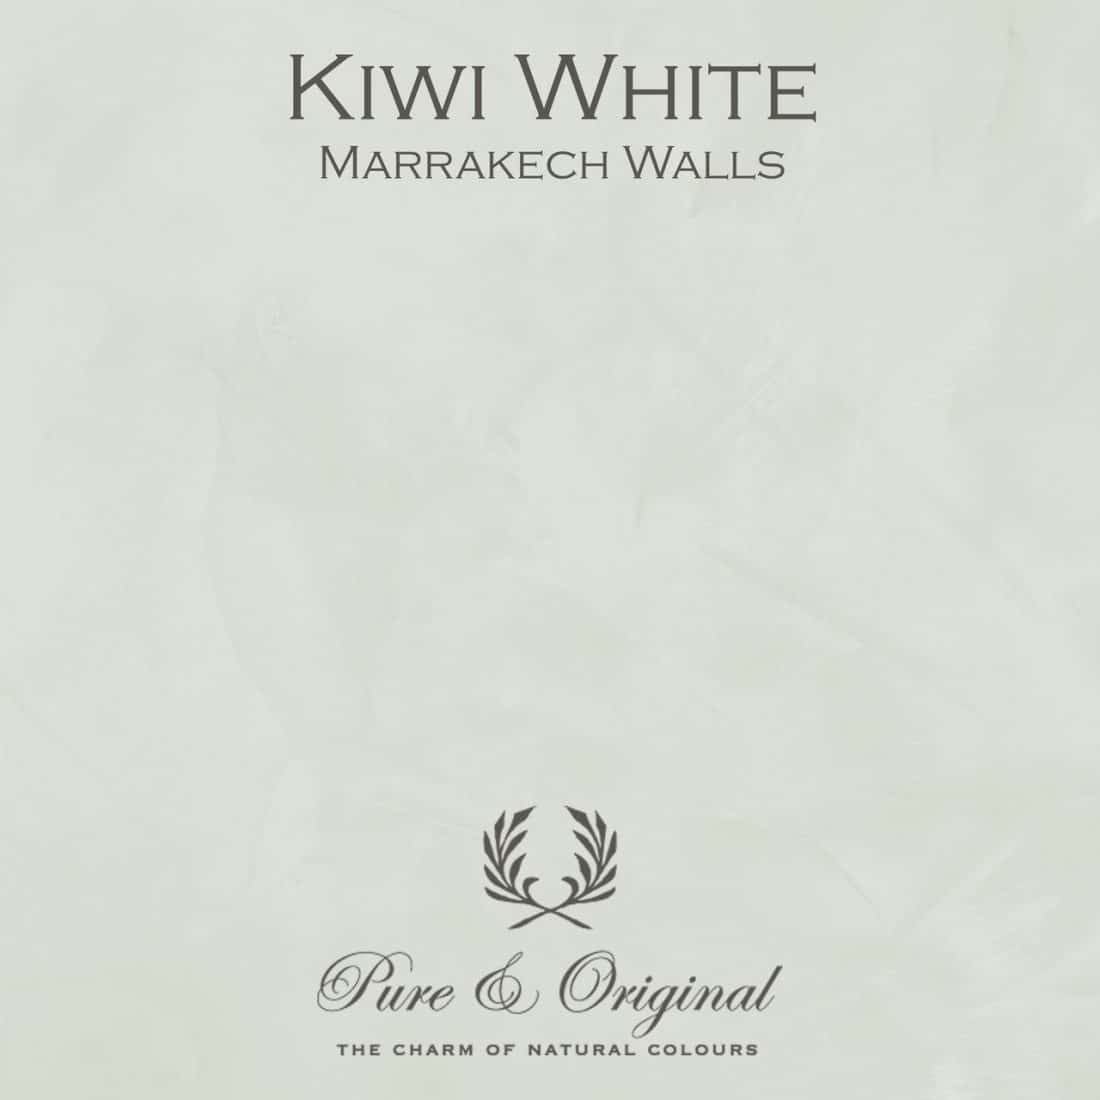 Kiwi White Marrakech Walls Pure Original